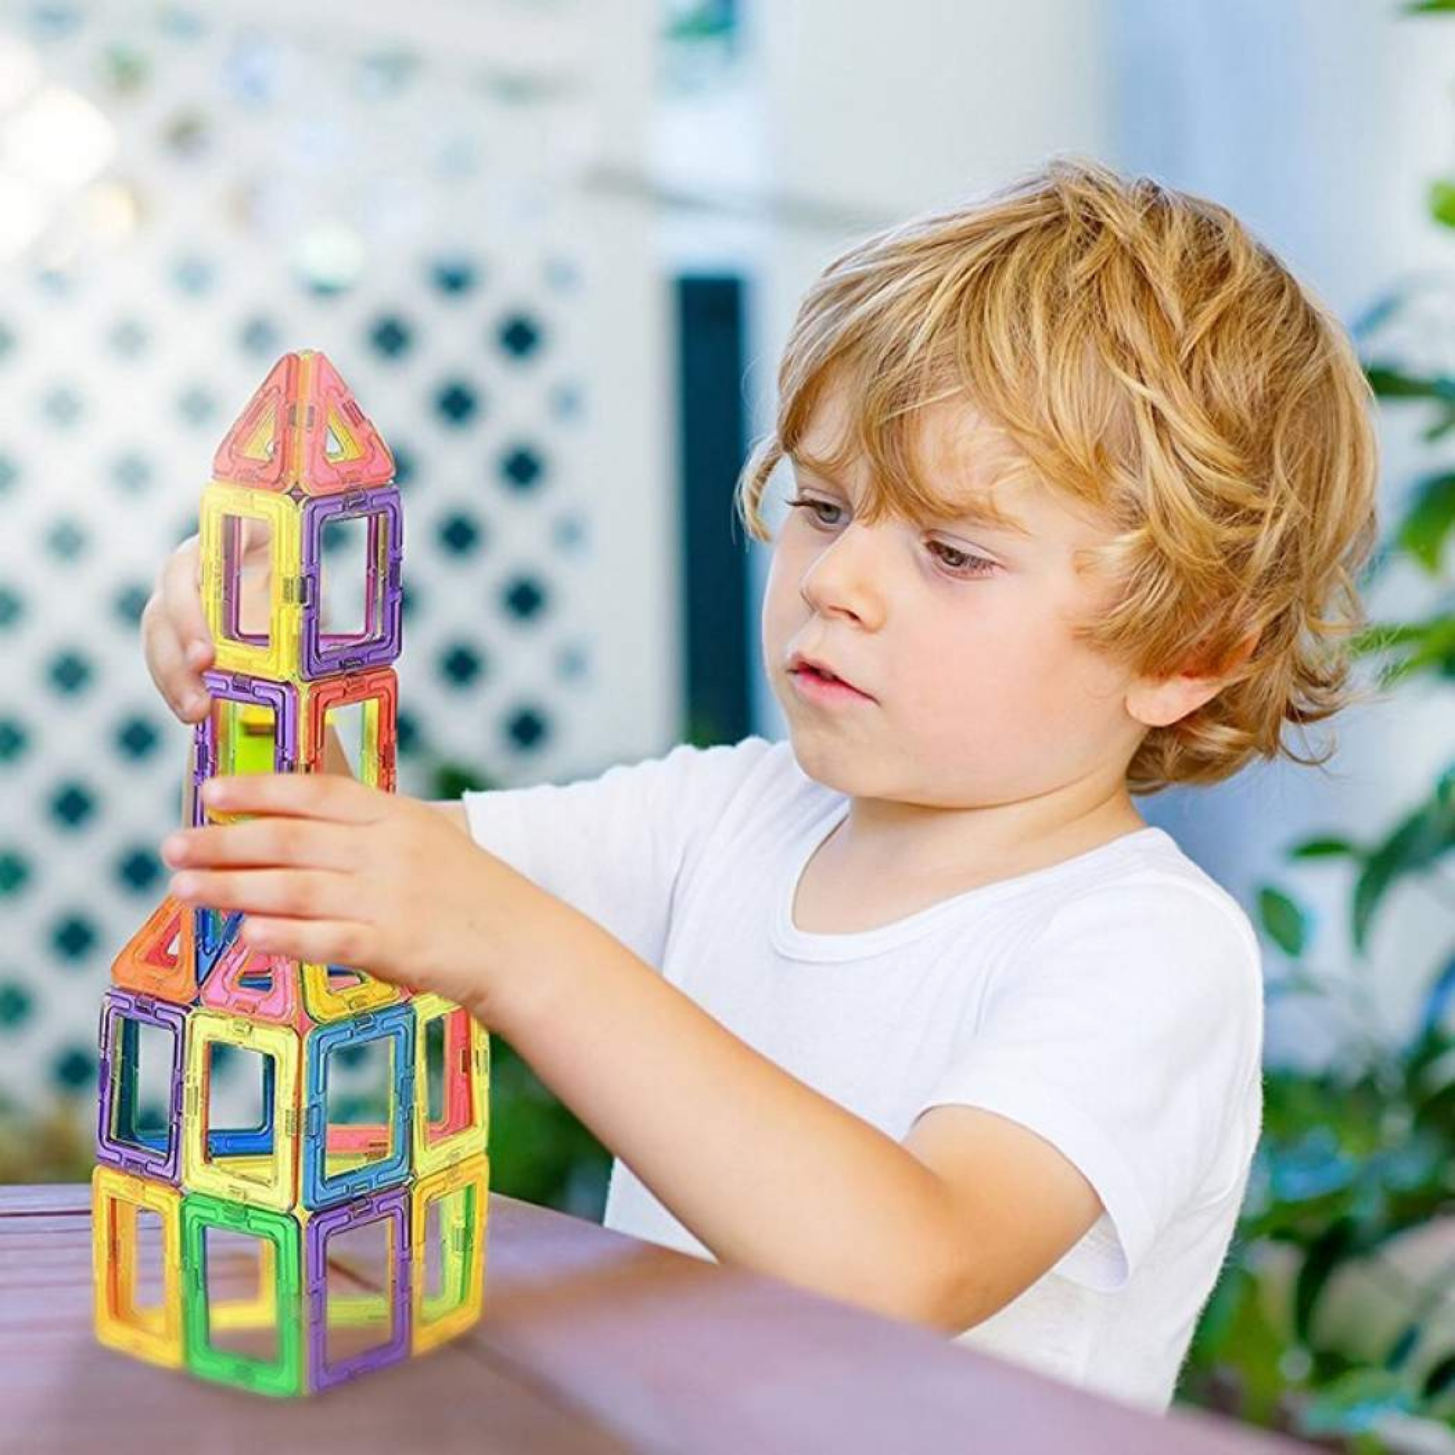 Sensorii's toys- Boy building a rocket ship with Sensorii's magnetic shapes  